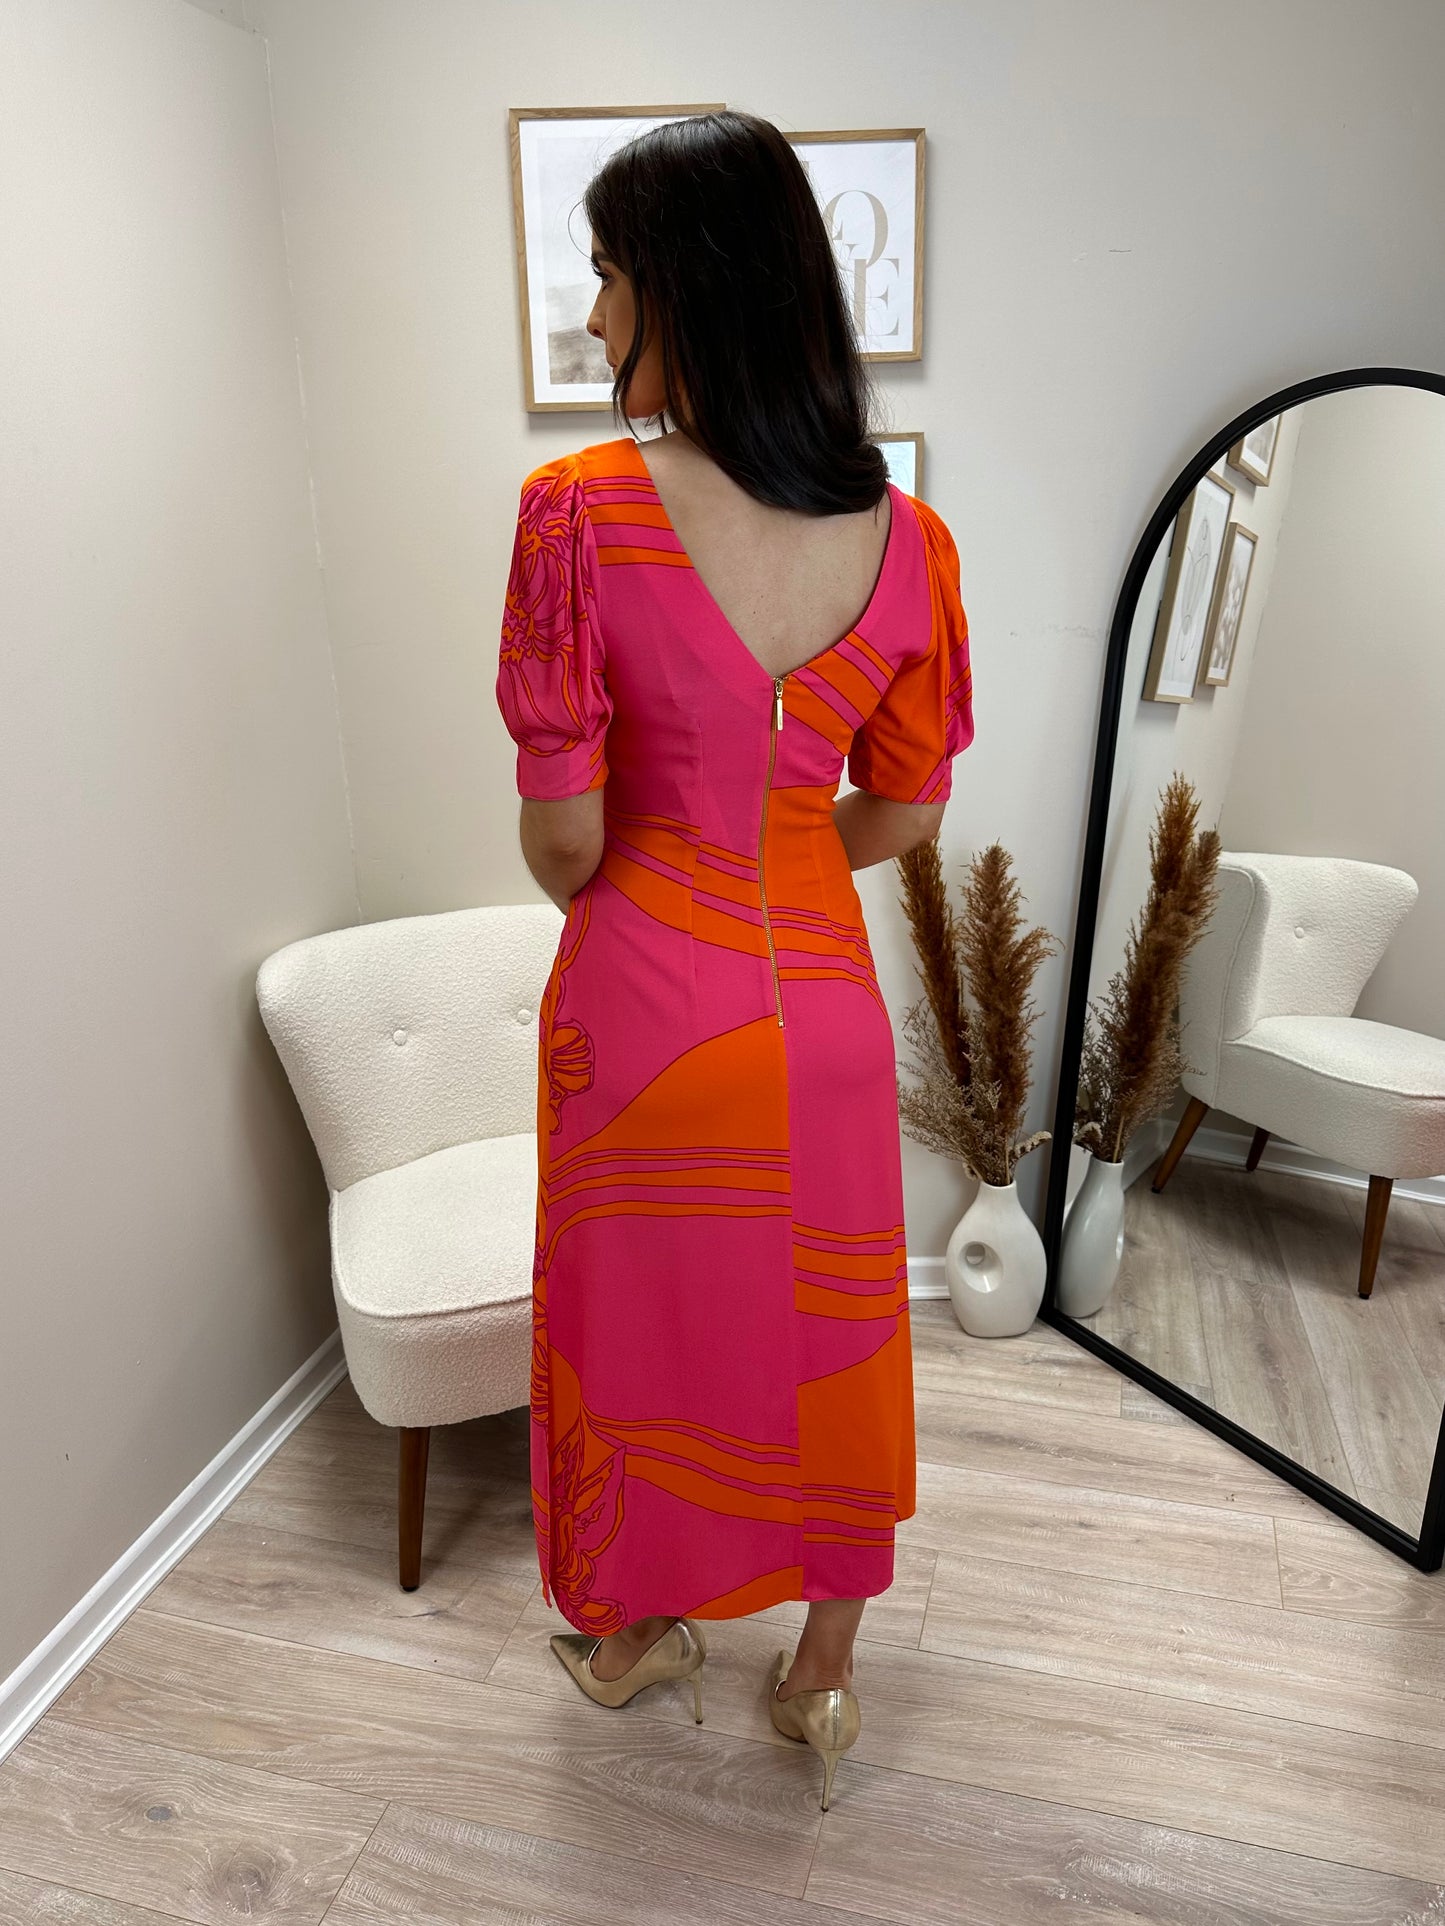 Closet orange and pink dress